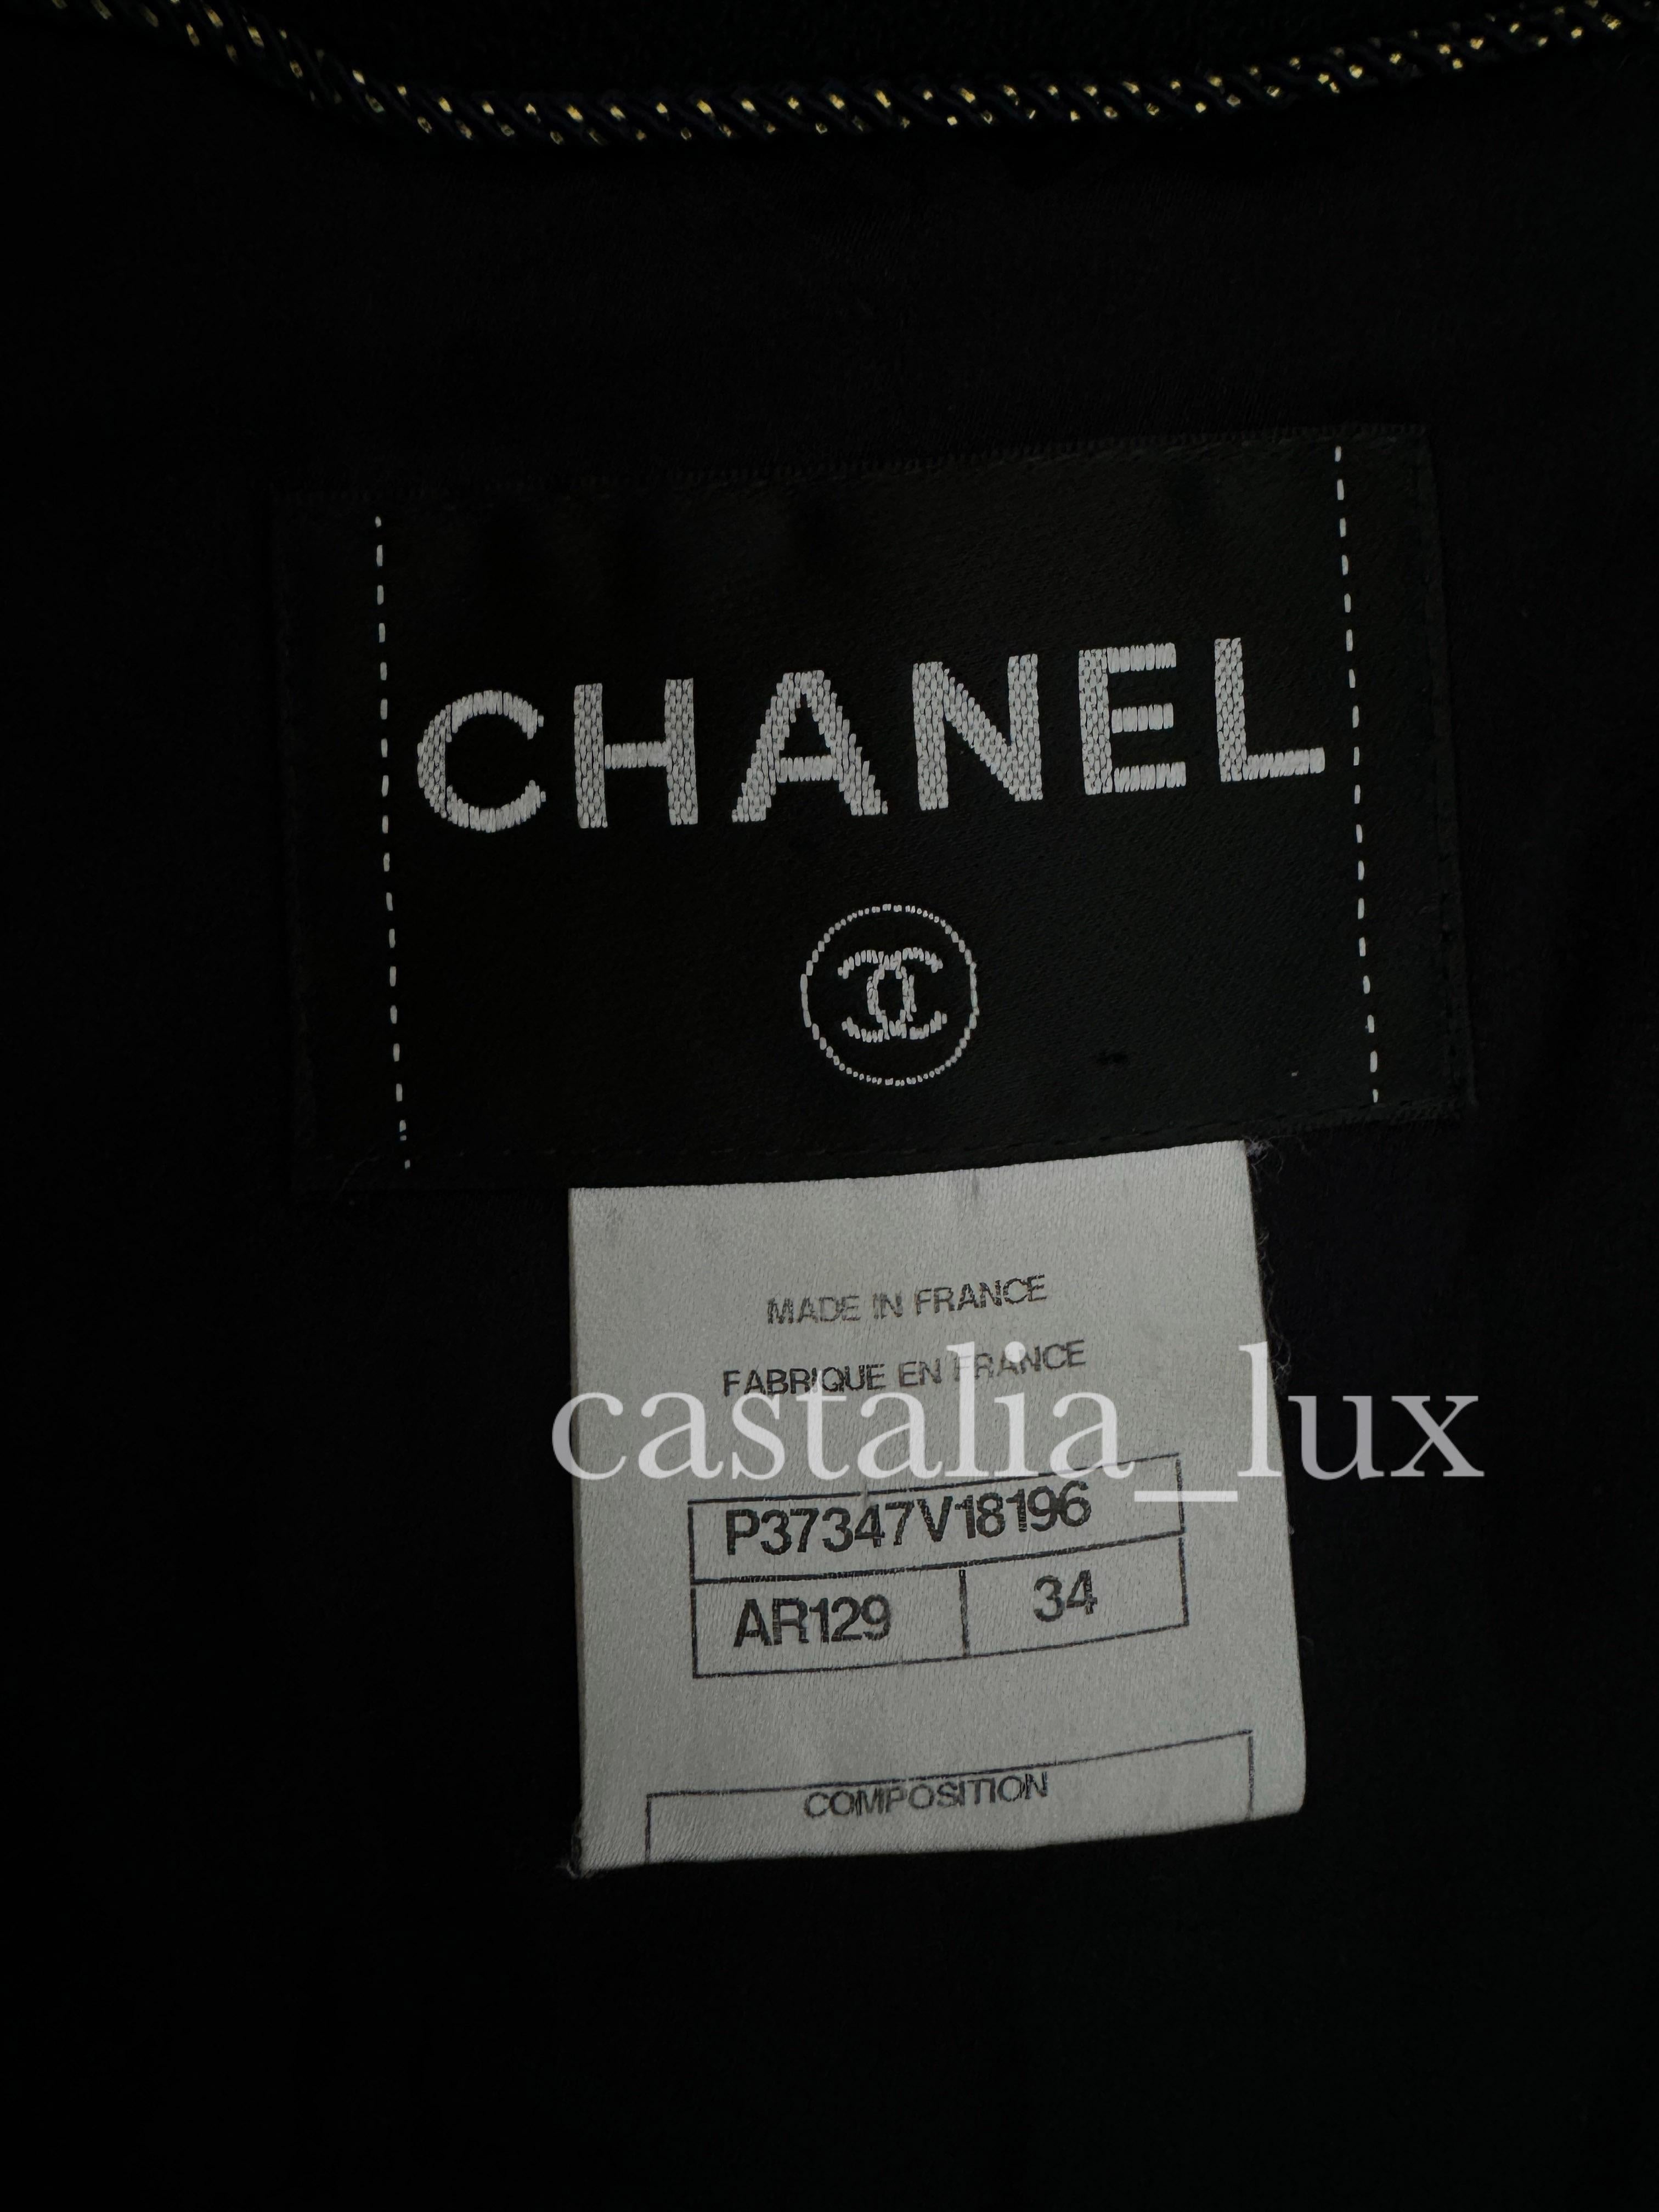 Chanel Iconic Paris / Venice Little Tweed Jacket For Sale 8